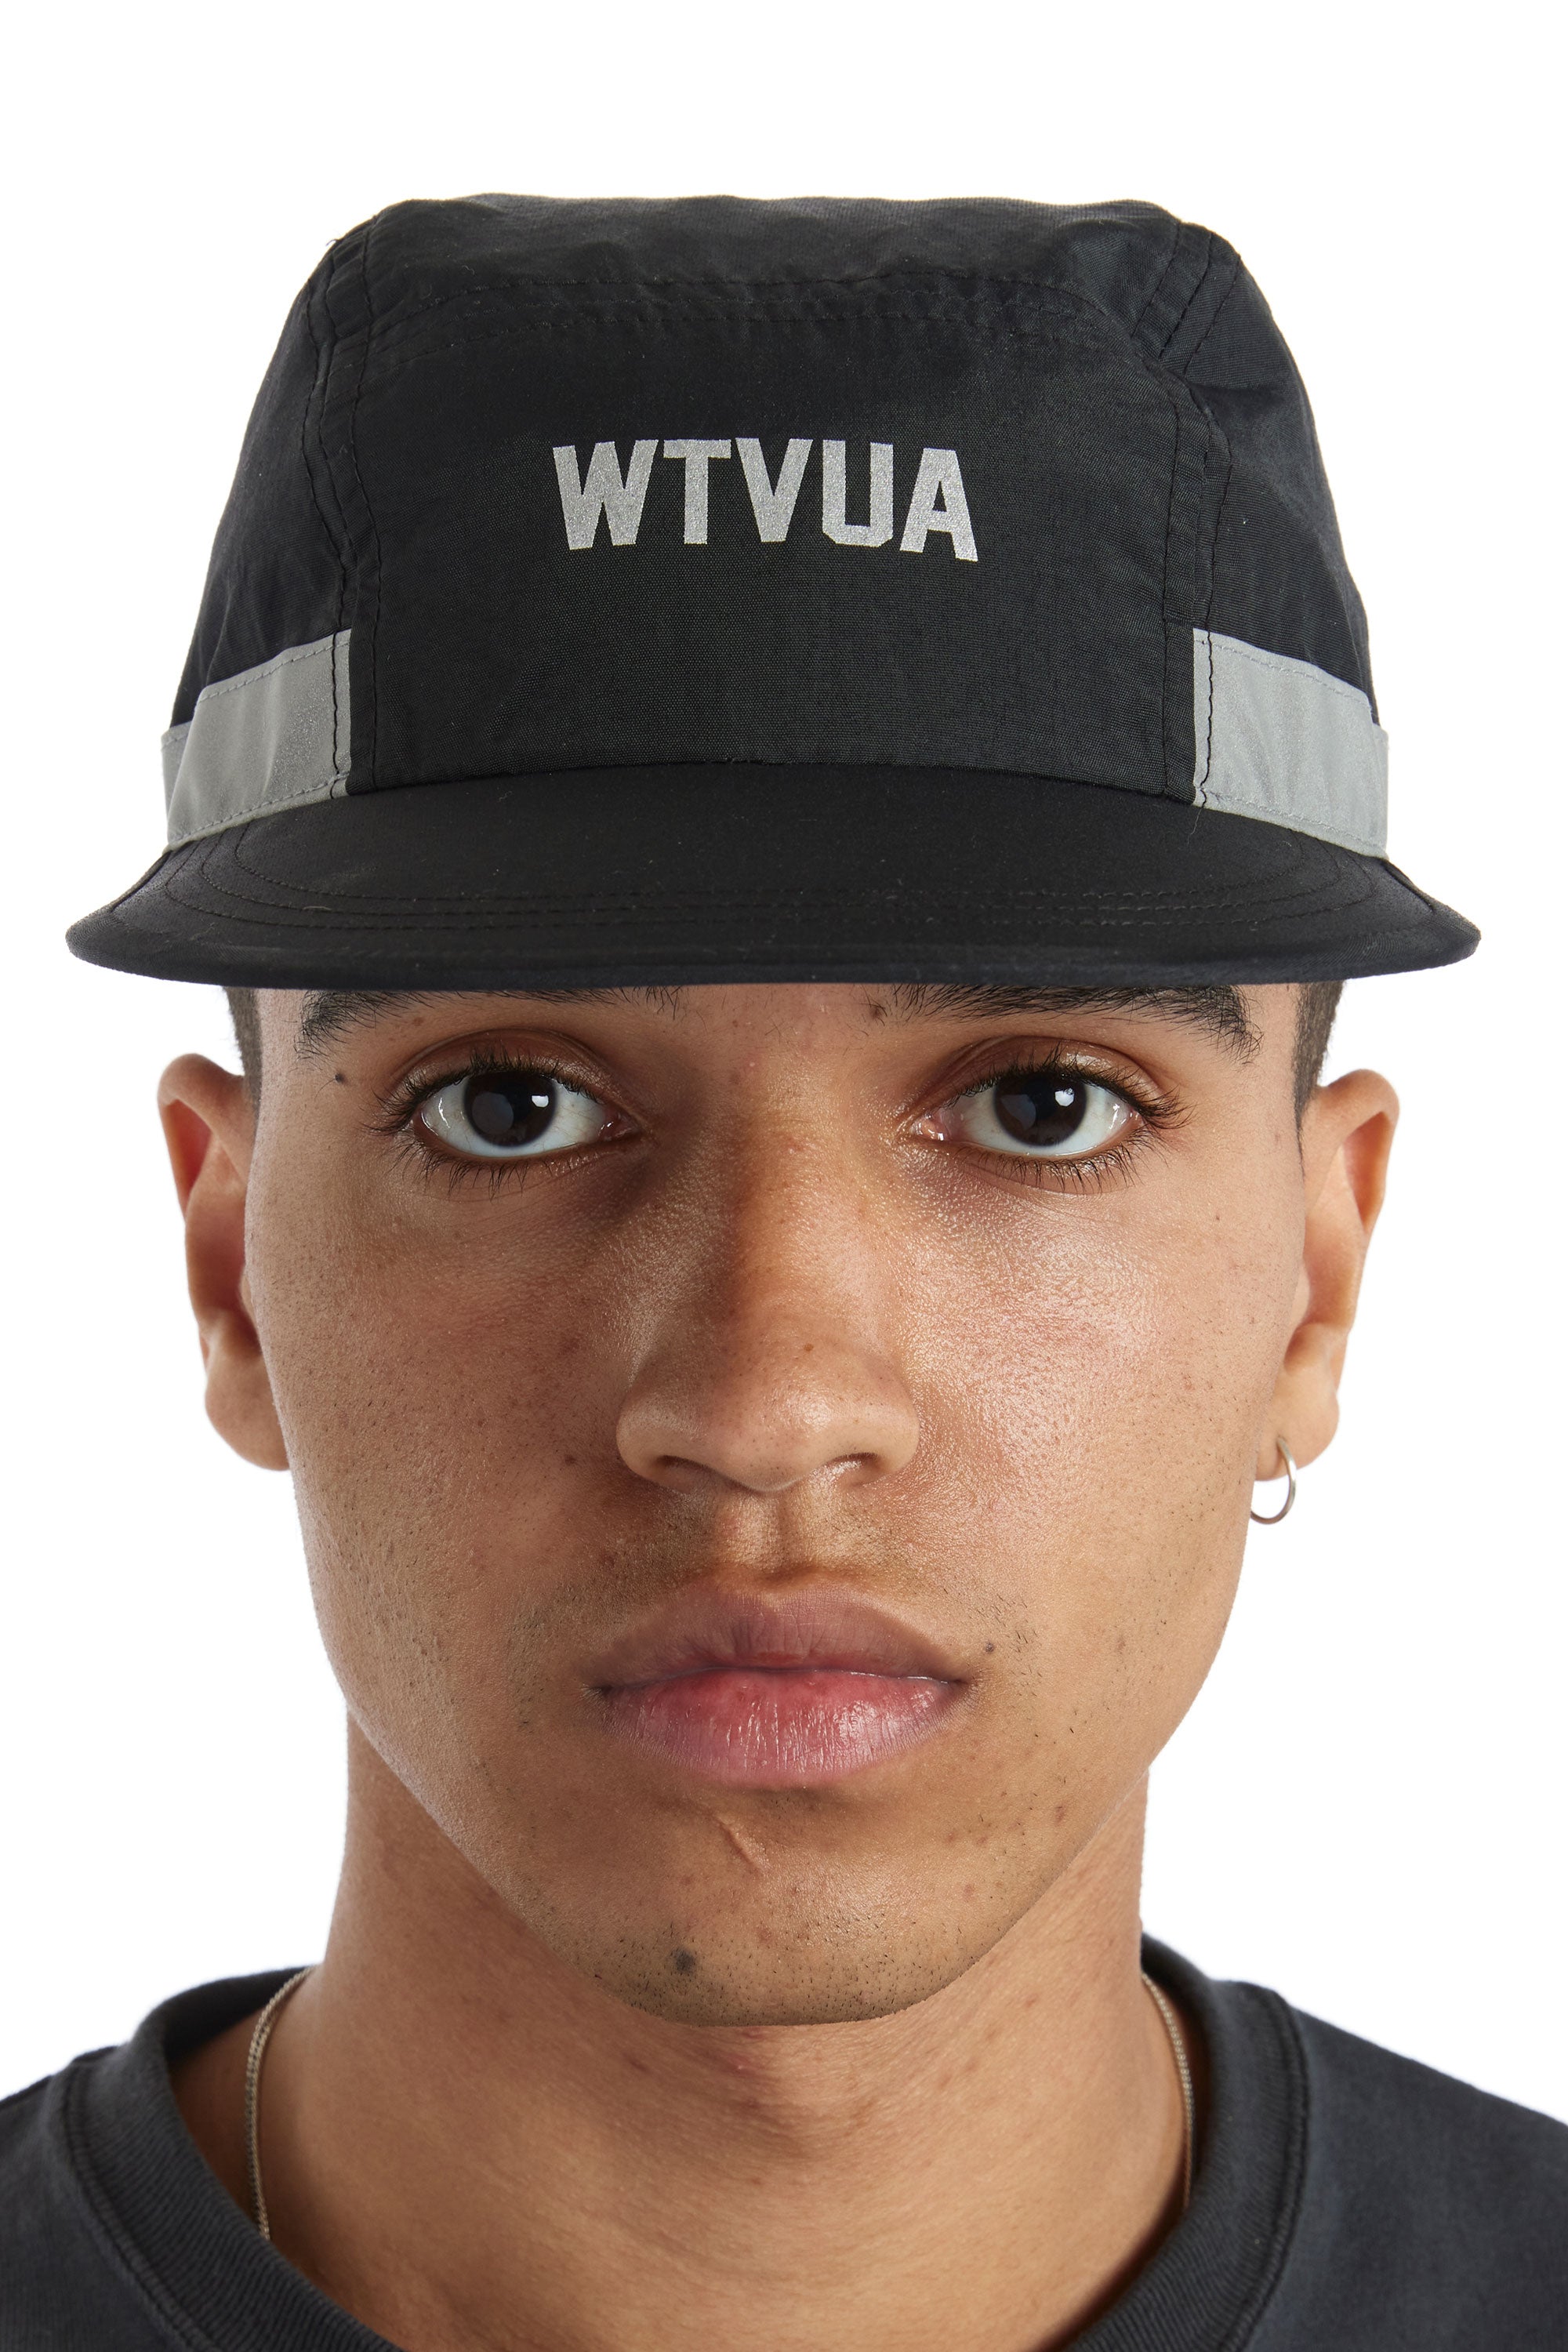 WTAPS - T-7 WTVUA NYLON TAFFETA CAP